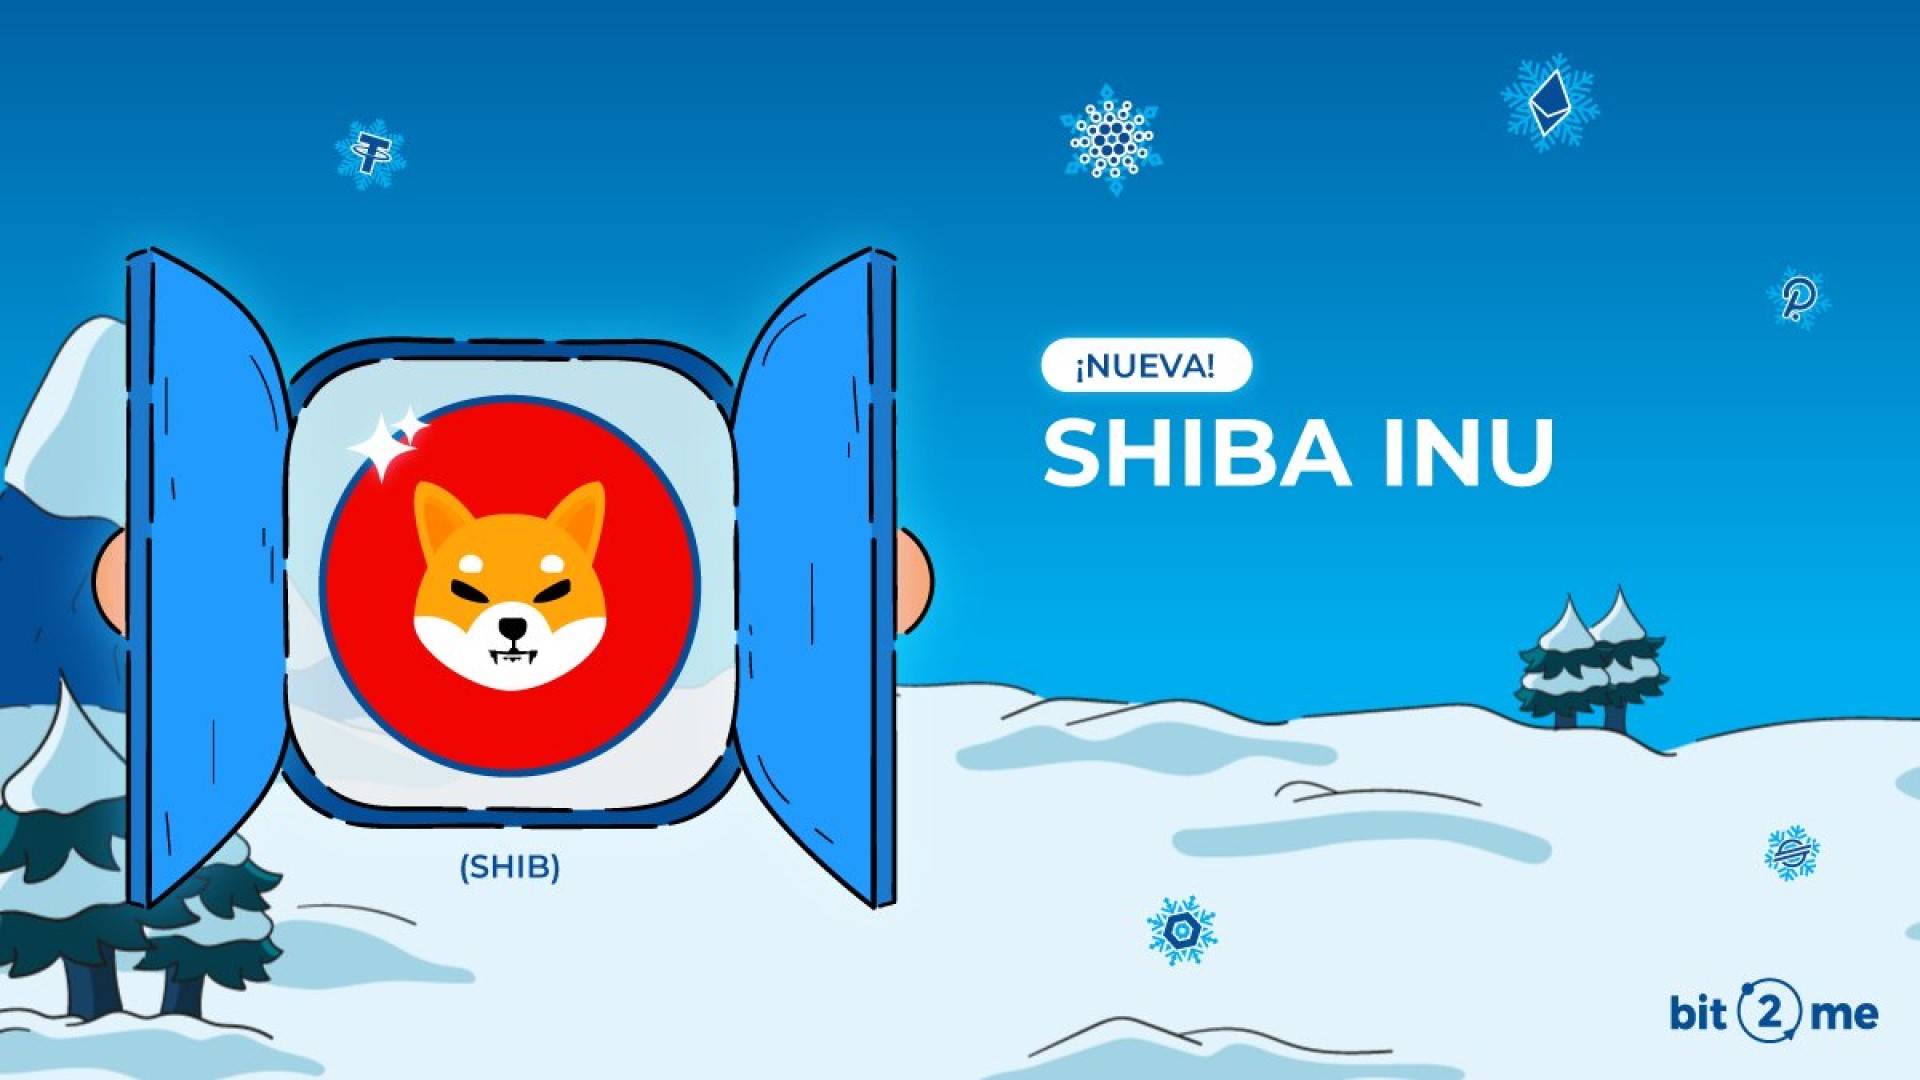 Shiba Inu (SHIB) ถูกเพิ่มอยู่ในรายชื่อซื้อขายของ Bit2Me แพลตฟอร์มซื้อขายคริปโทสเปน